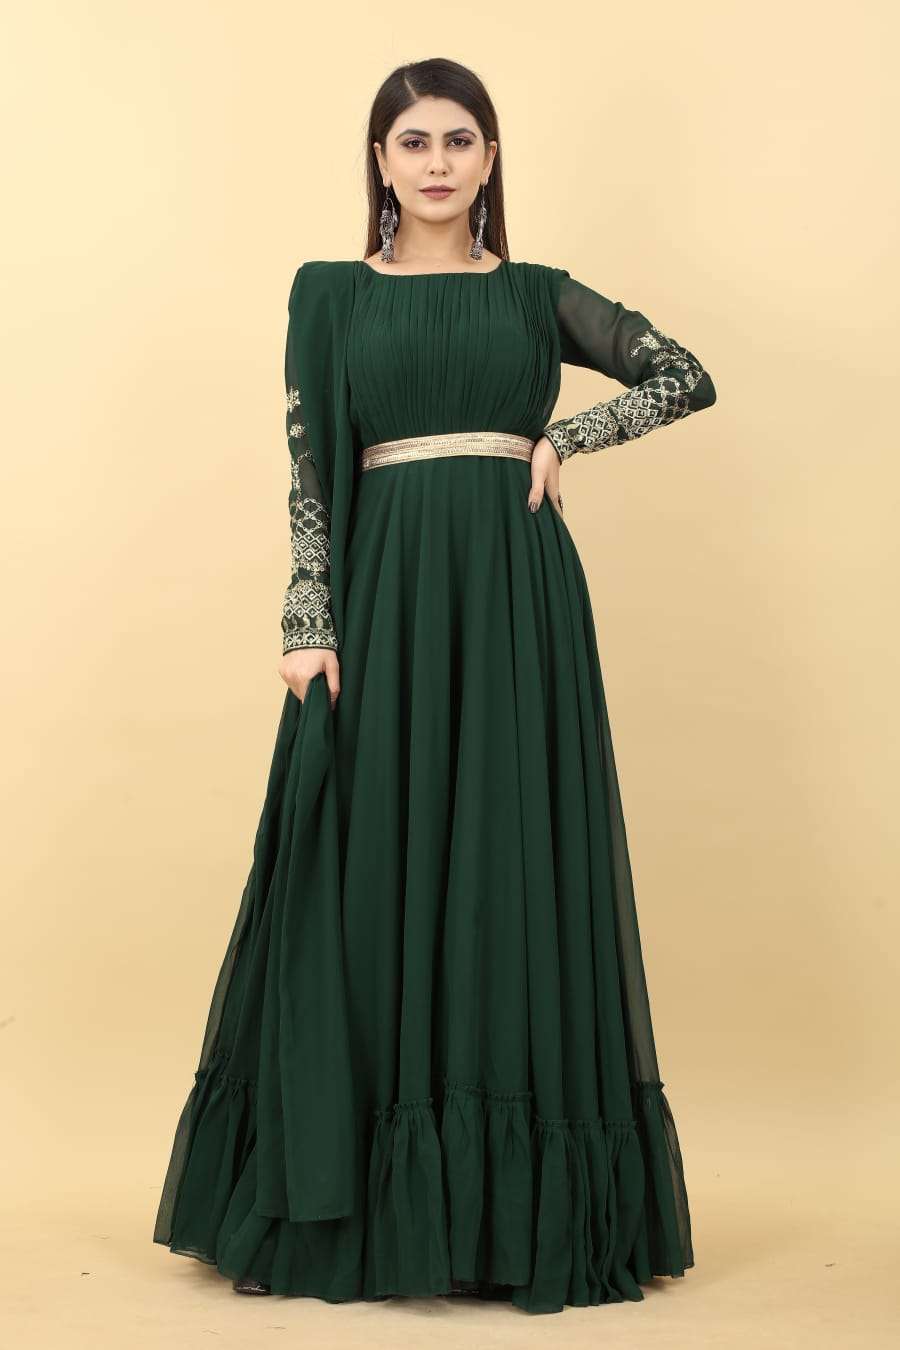 Lehenga Dress Design Ideas To Dial-up The Glam At Your Sangeet | Lehenga  designs, Latest lehenga designs, Designer dresses